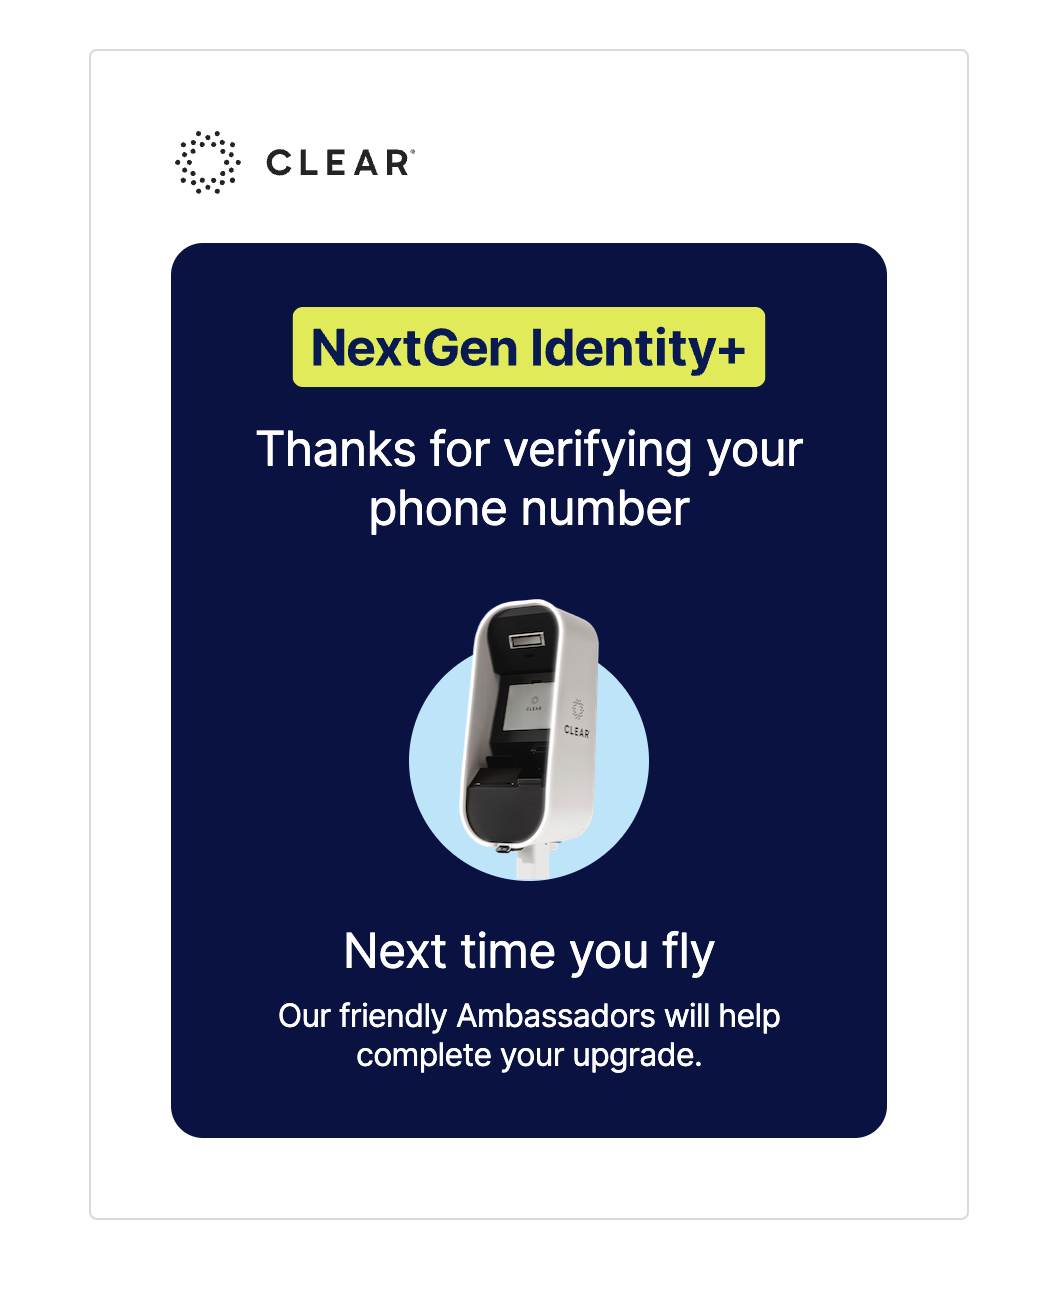 CLEAR NextGen Identity+